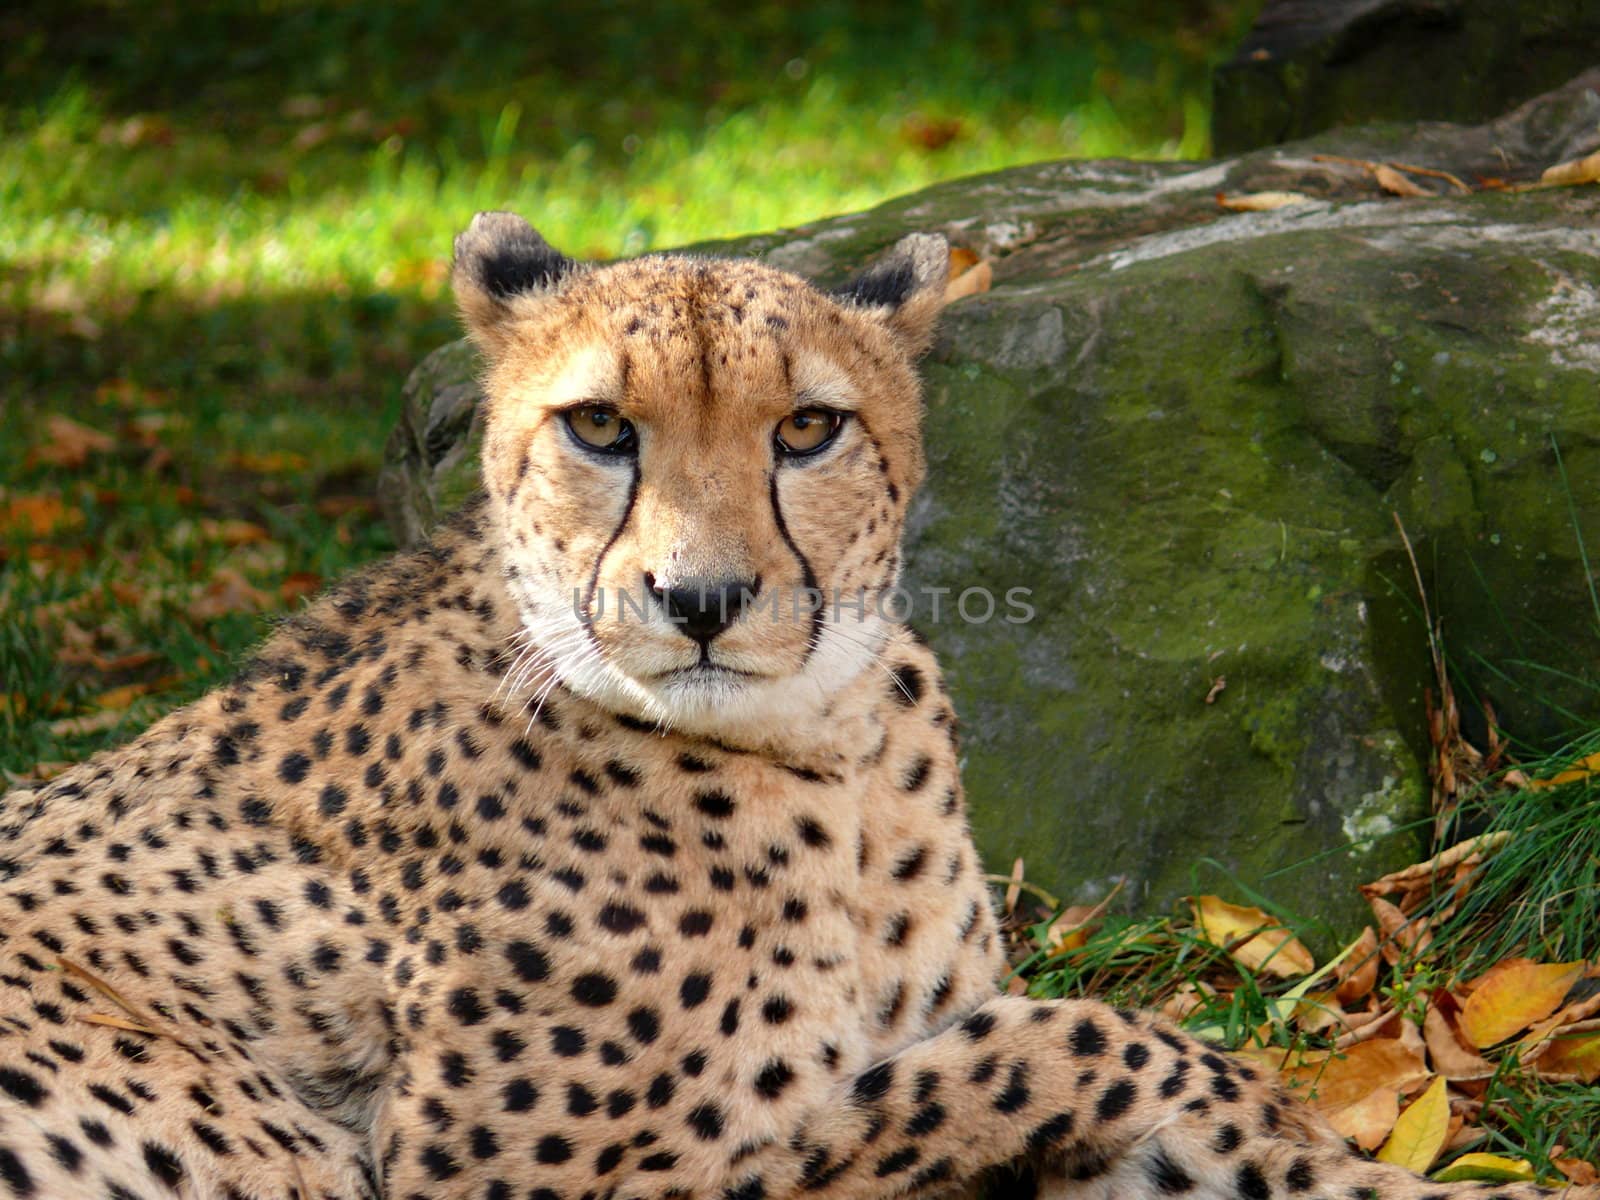 portrait of the Cheetah